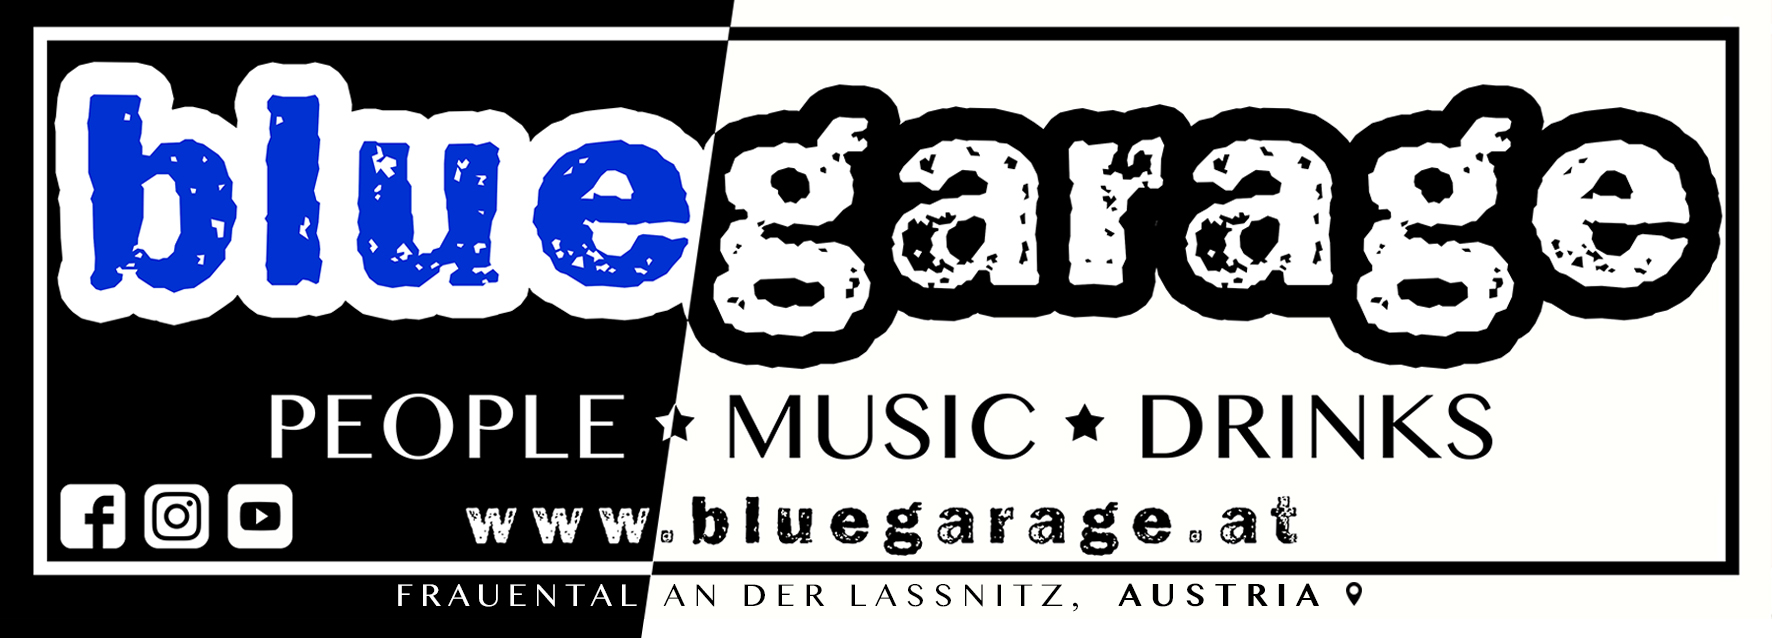 (c) Bluegarage.at